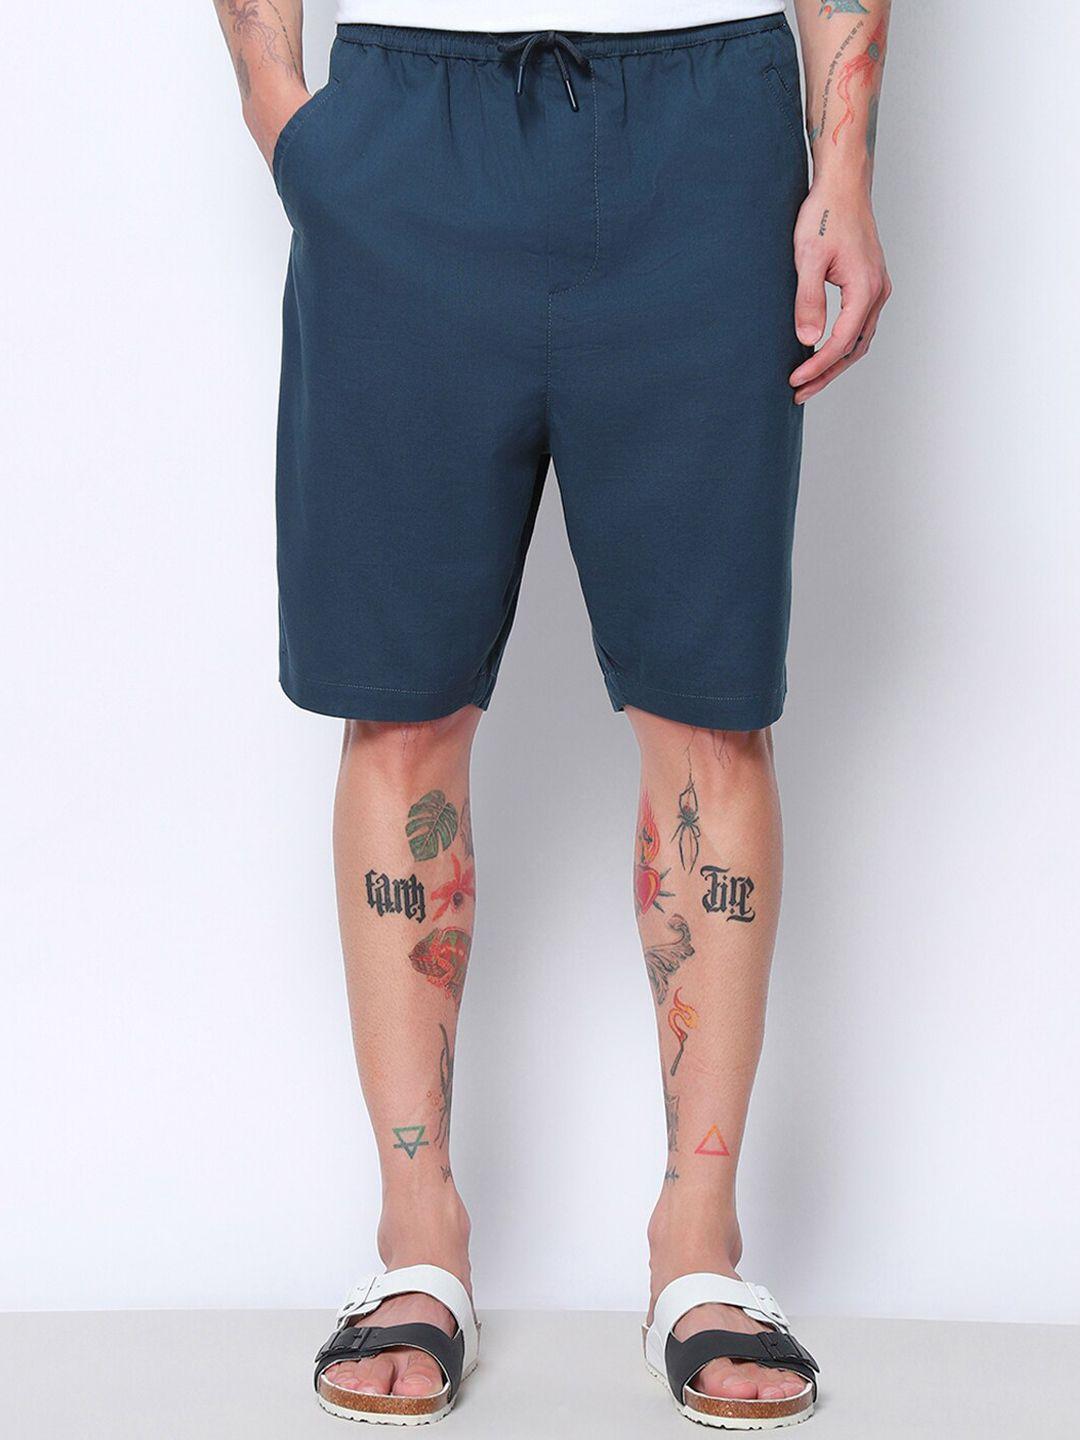 bewakoof-men-blue-mid-rise-pure-cotton-shorts